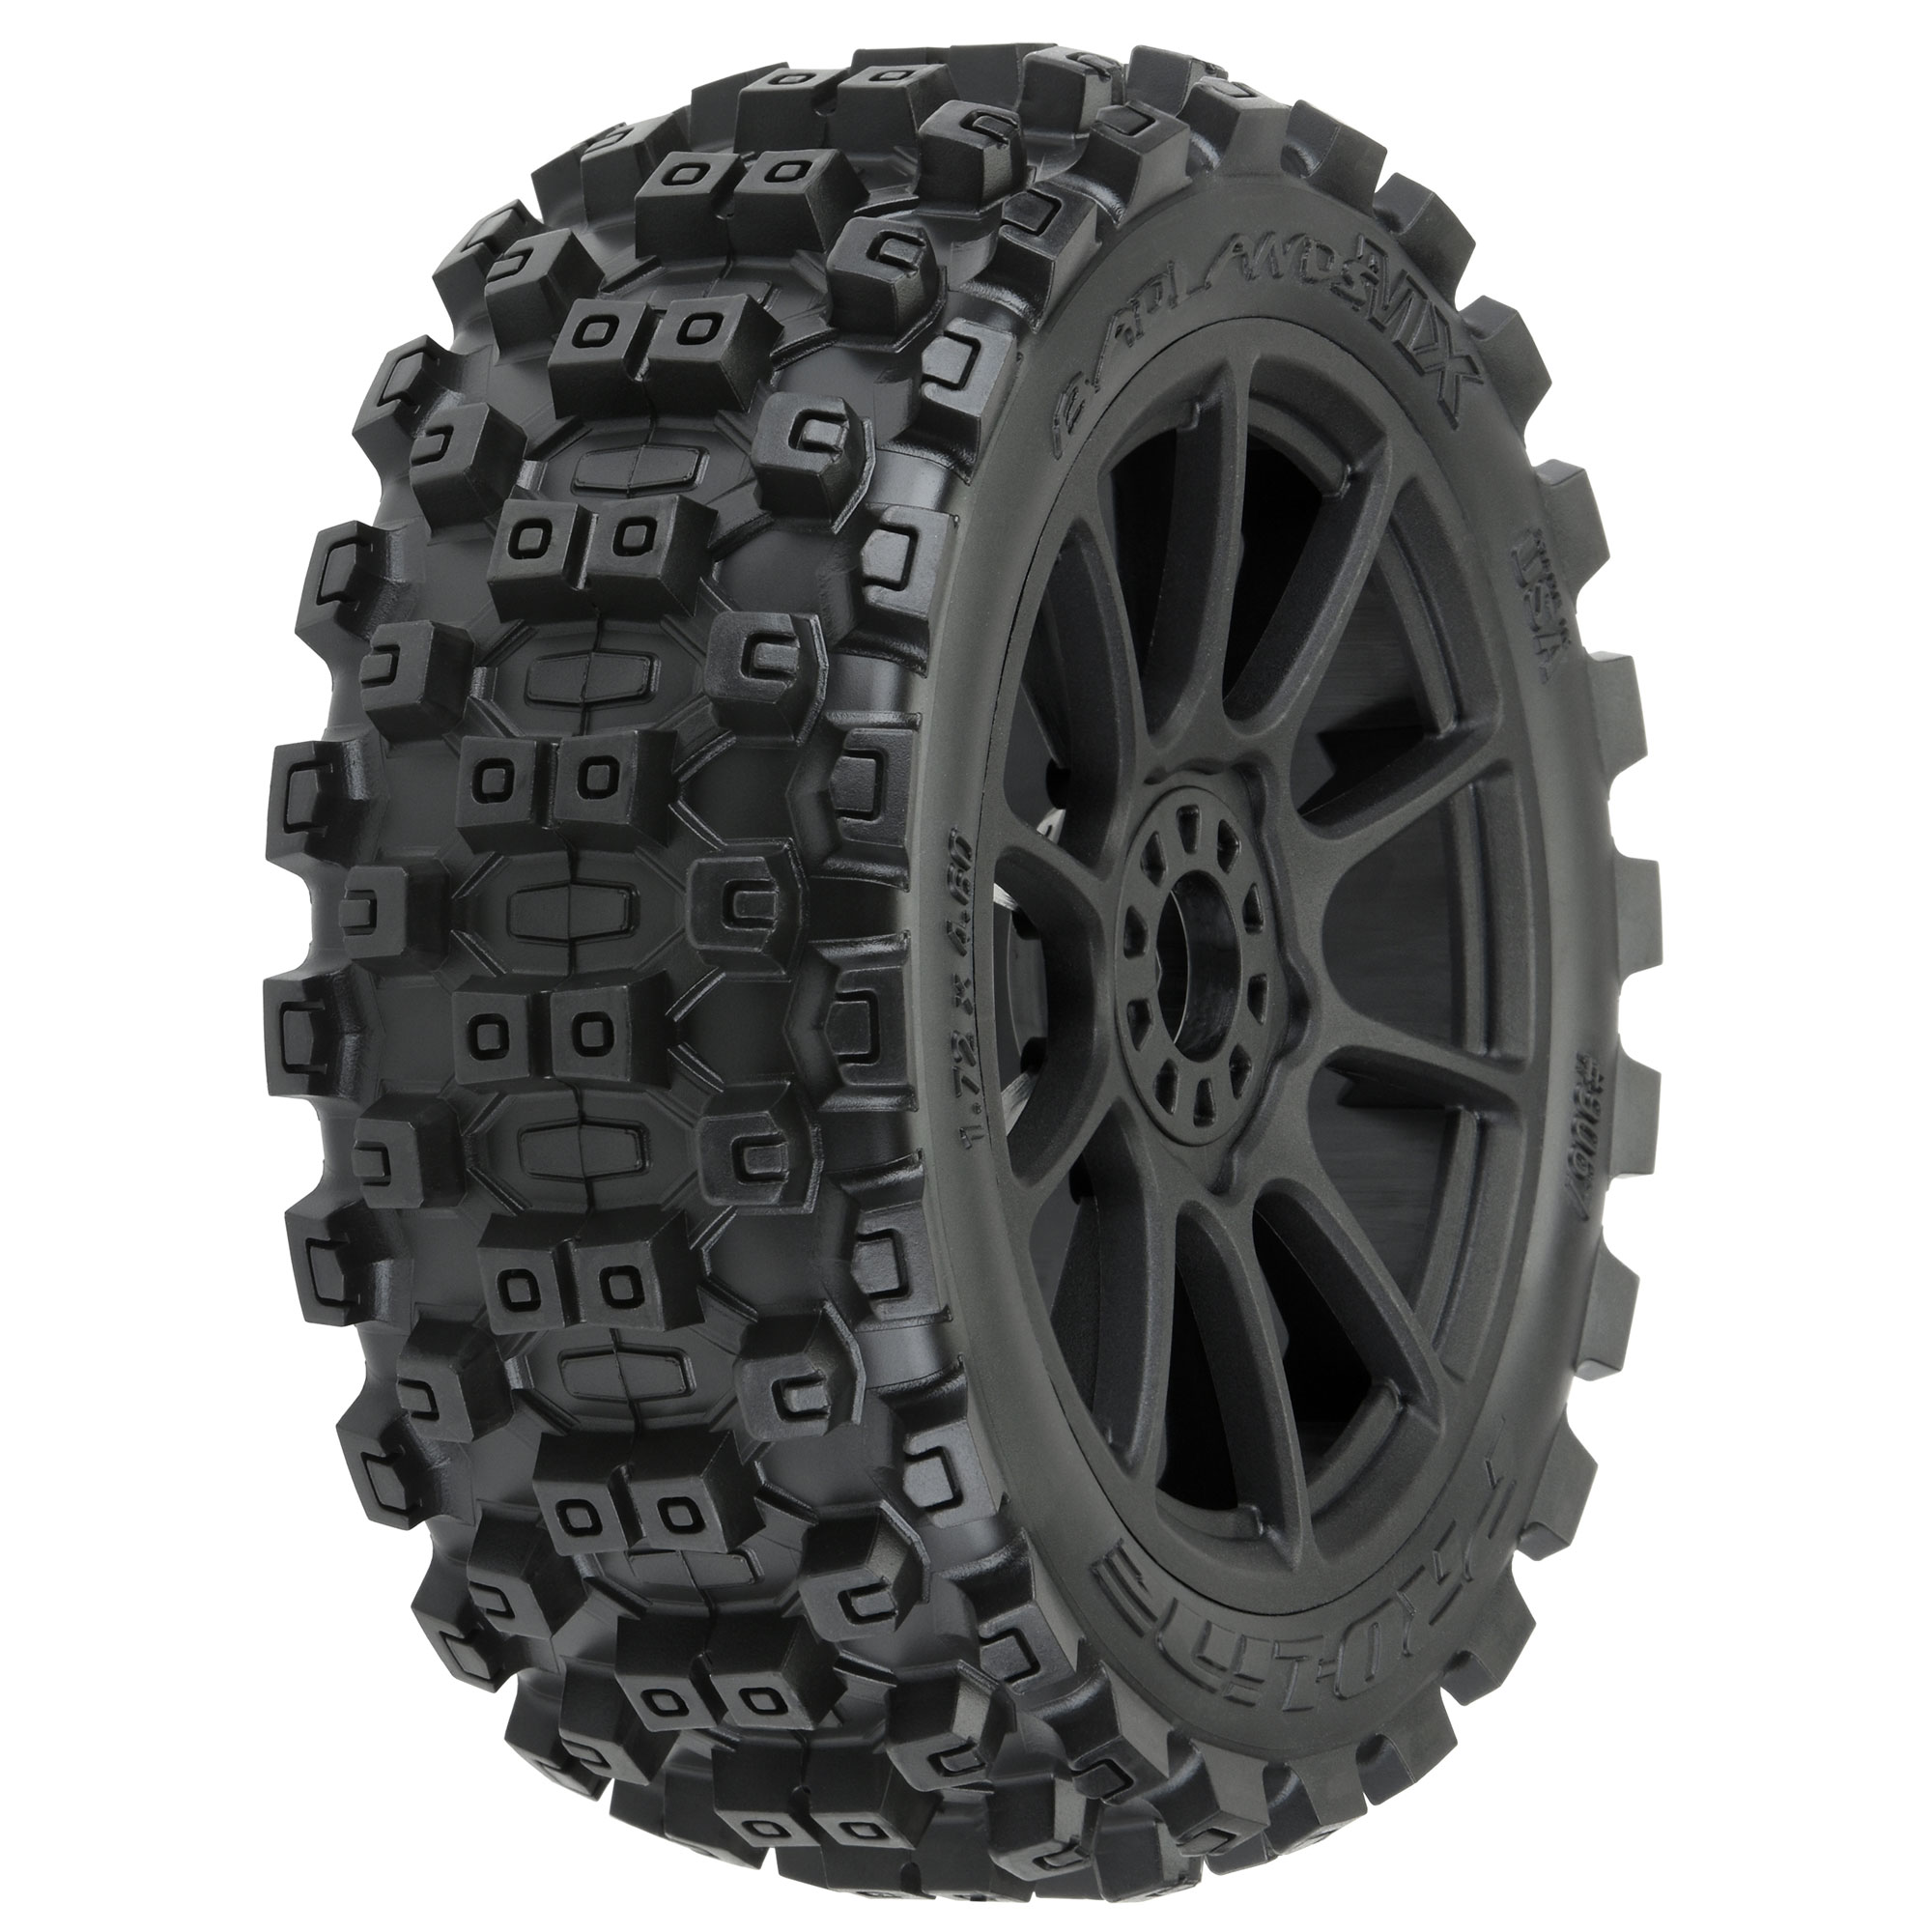 Pro-Line Badlands MX M2 All Terrain 1:8 Buggy Tires 2 F/R PRO9067-01